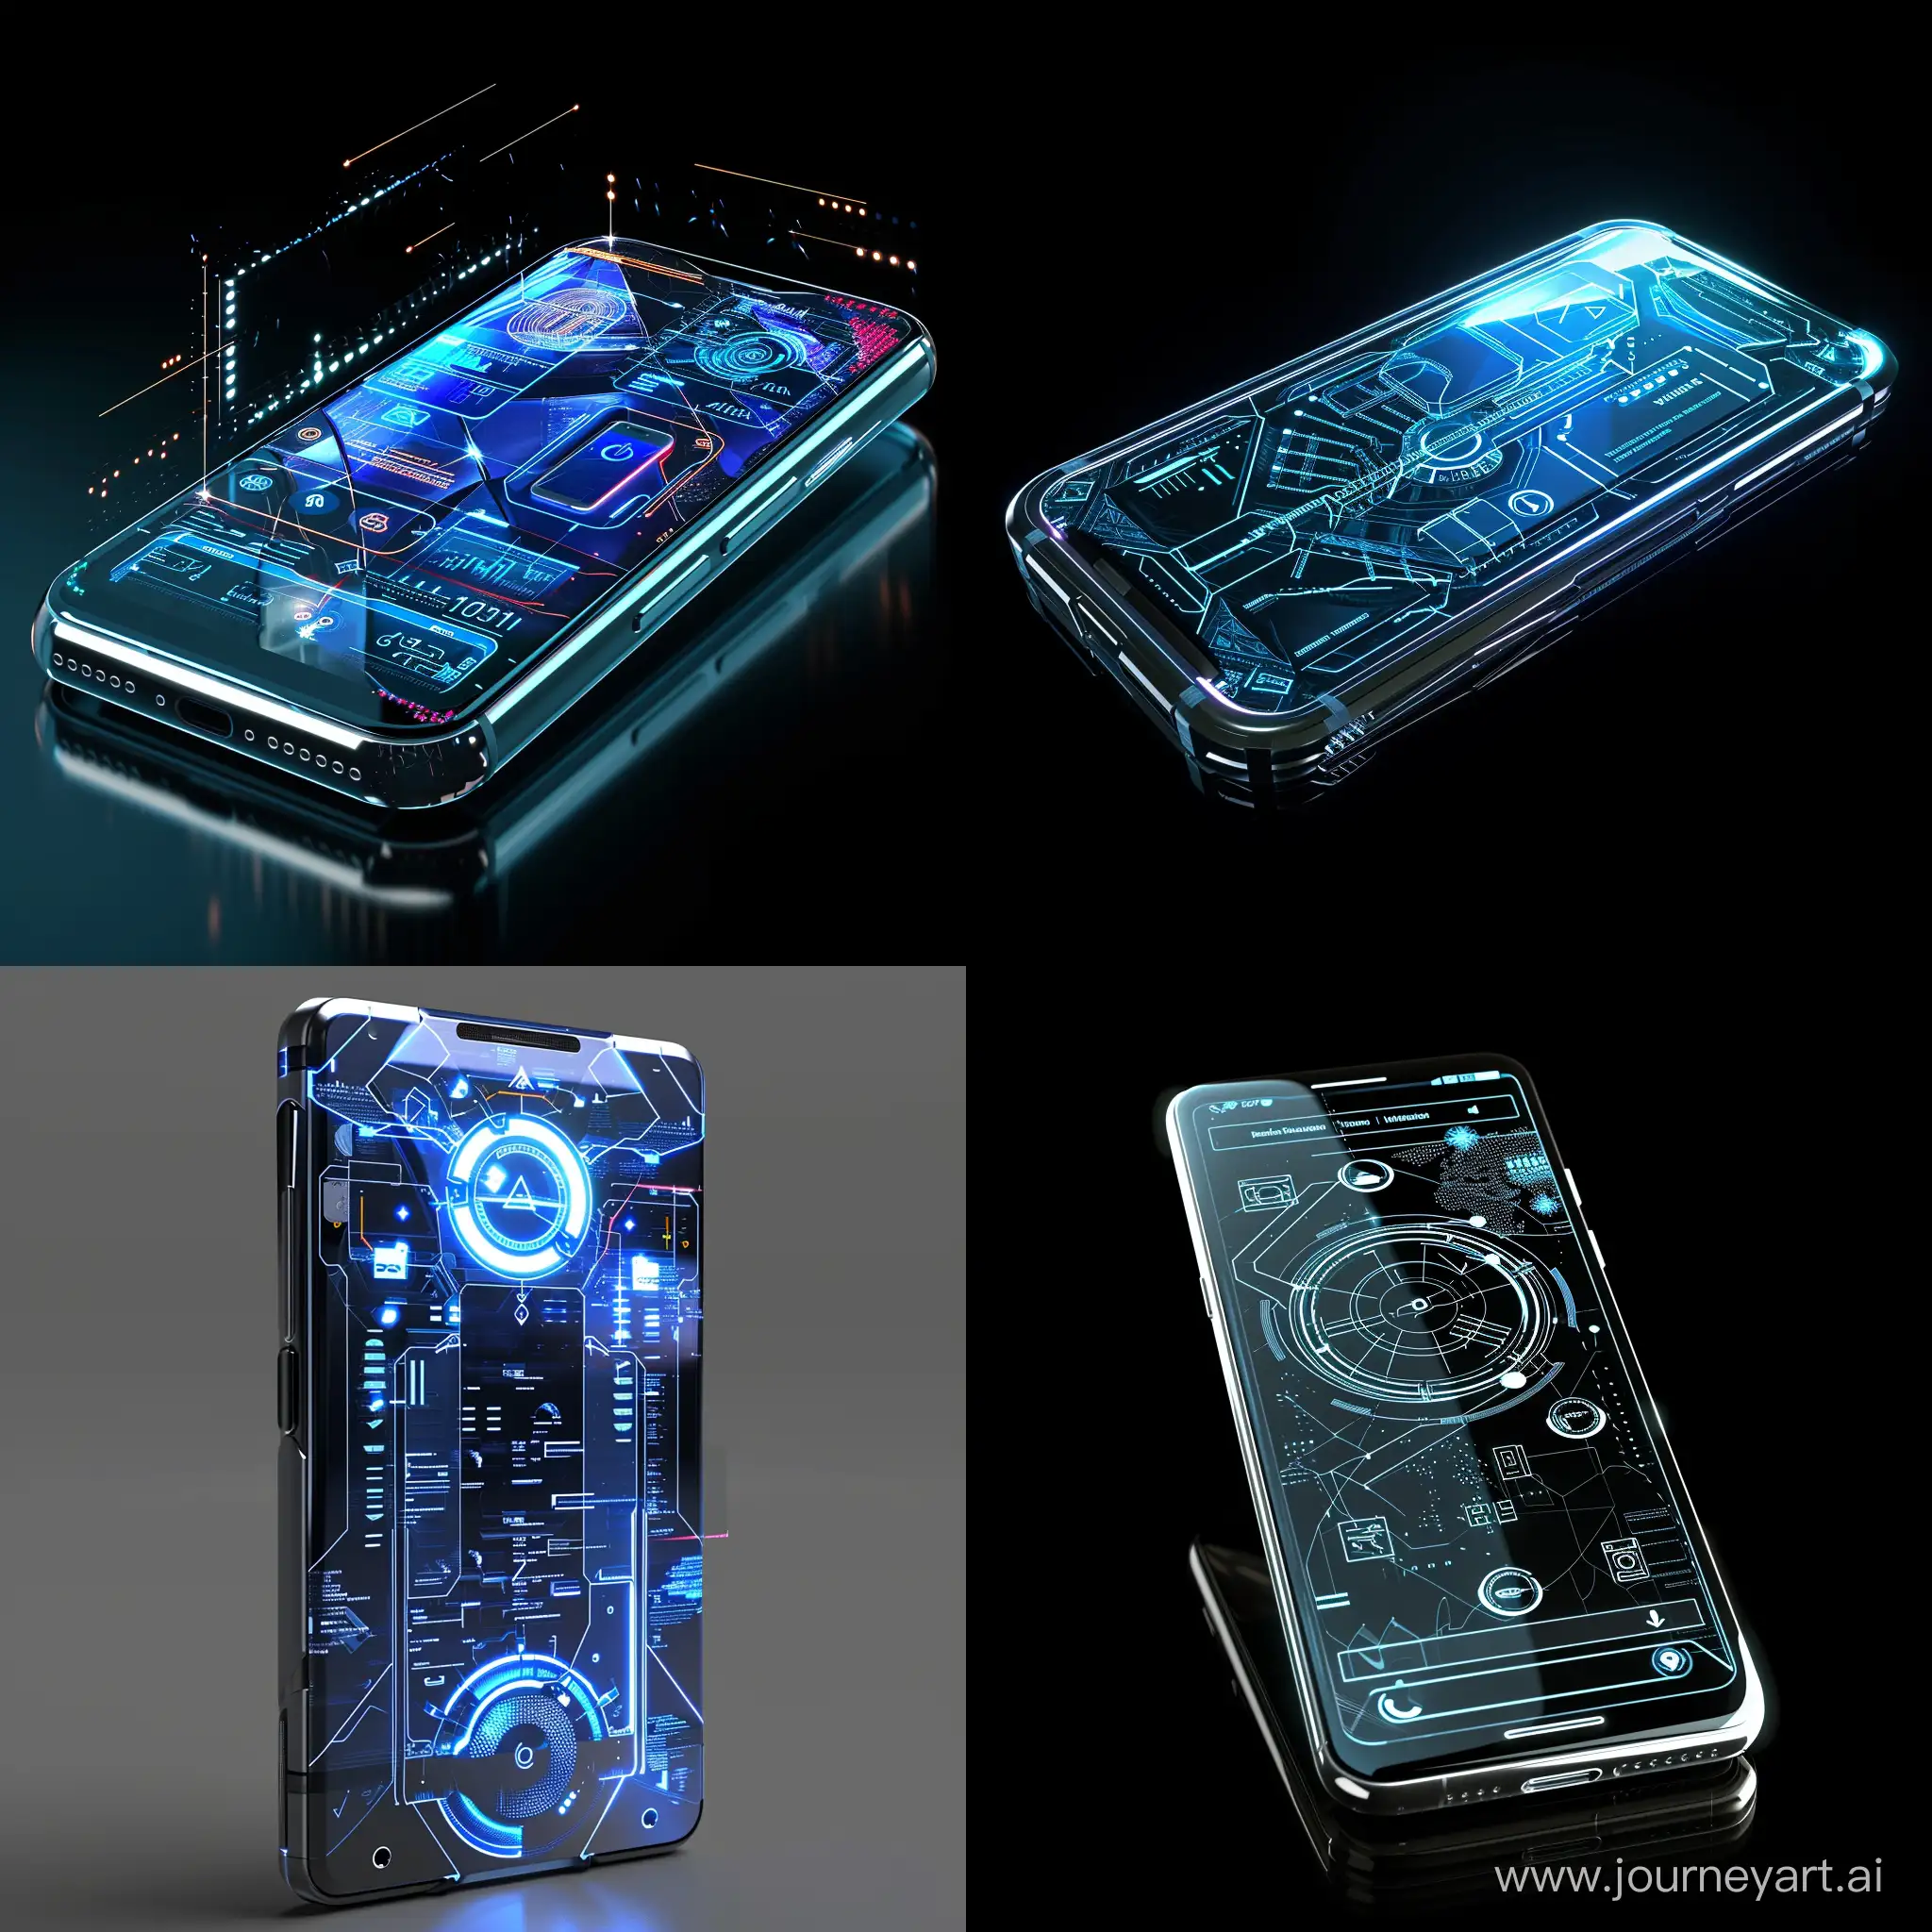 Futuristic-Advanced-Smartphone-with-Upbeta-Technology-Version-6